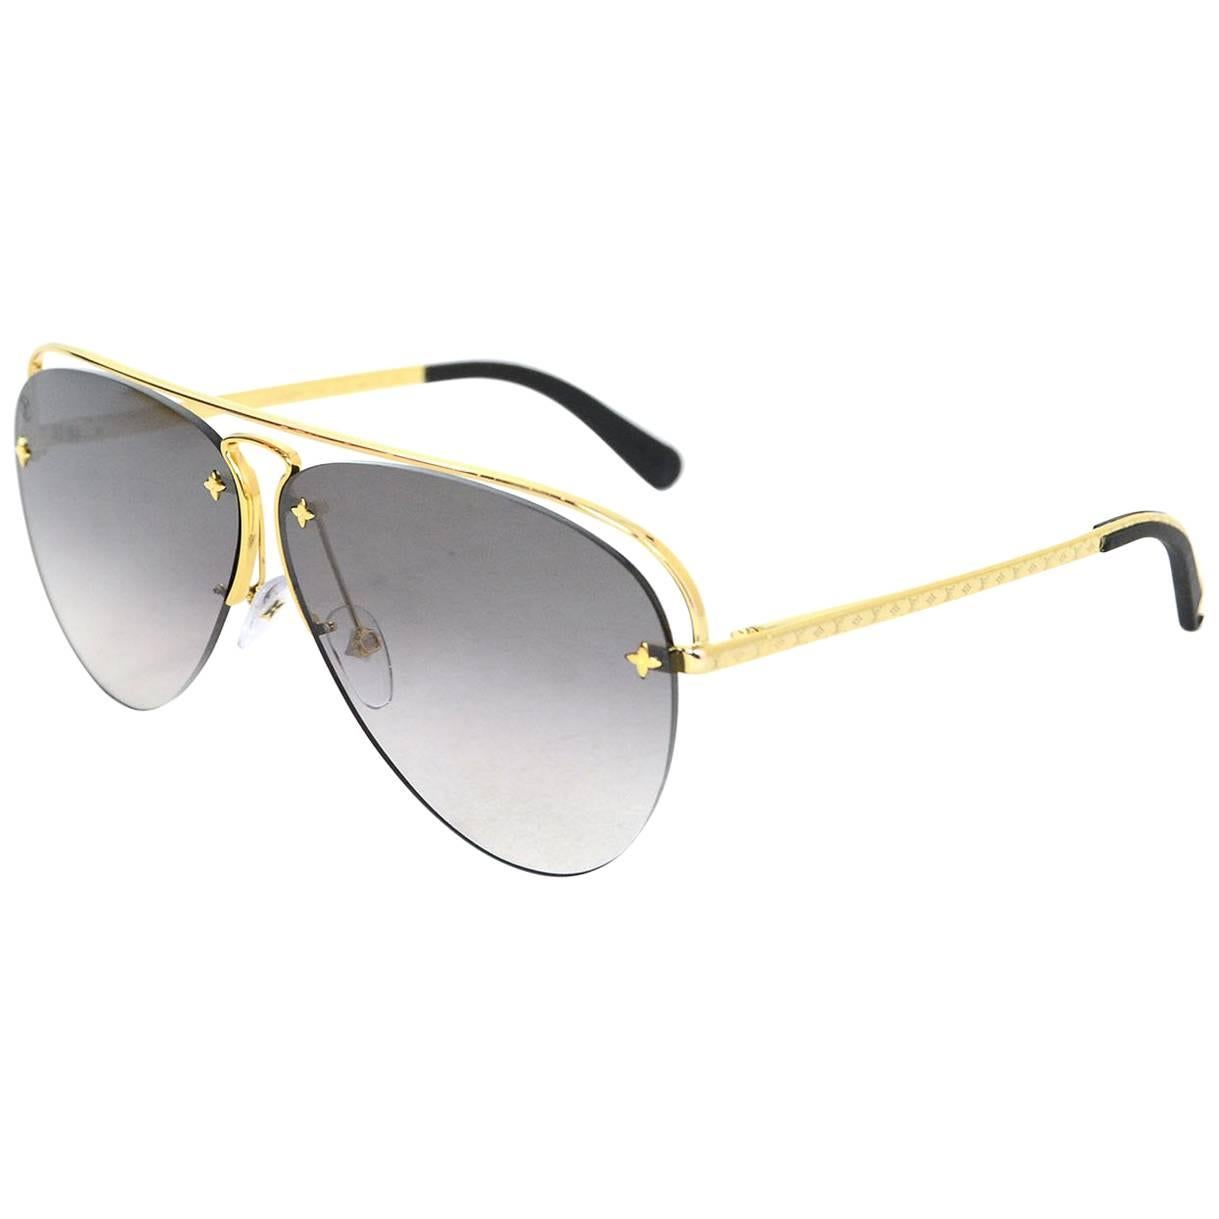 Louis Vuitton, Accessories, Louis Vuitton Grease Sunglasses